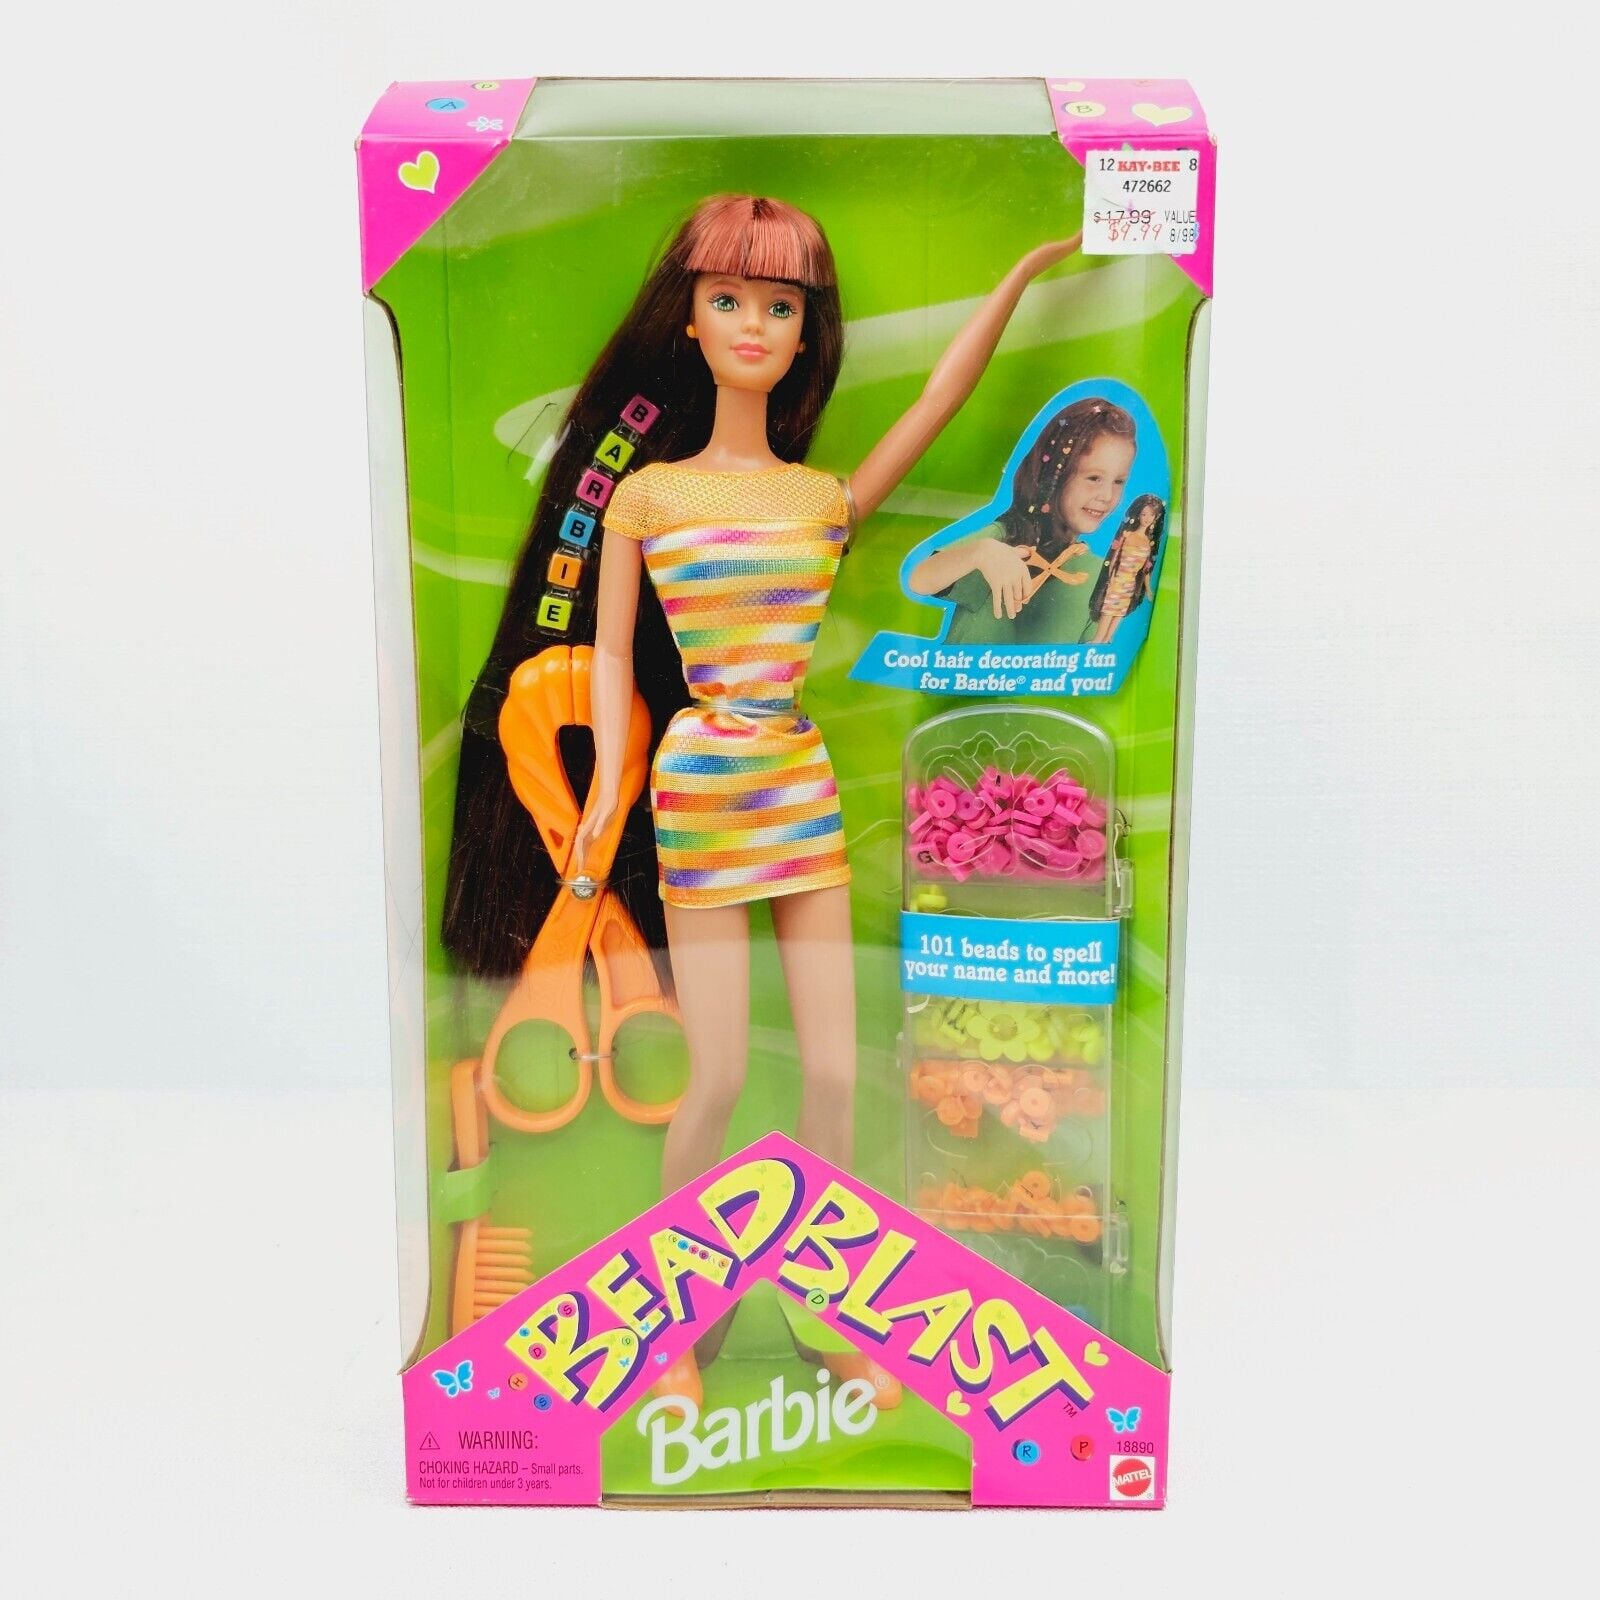 Barbie Girls  Childhood memories 2000, Childhood memories